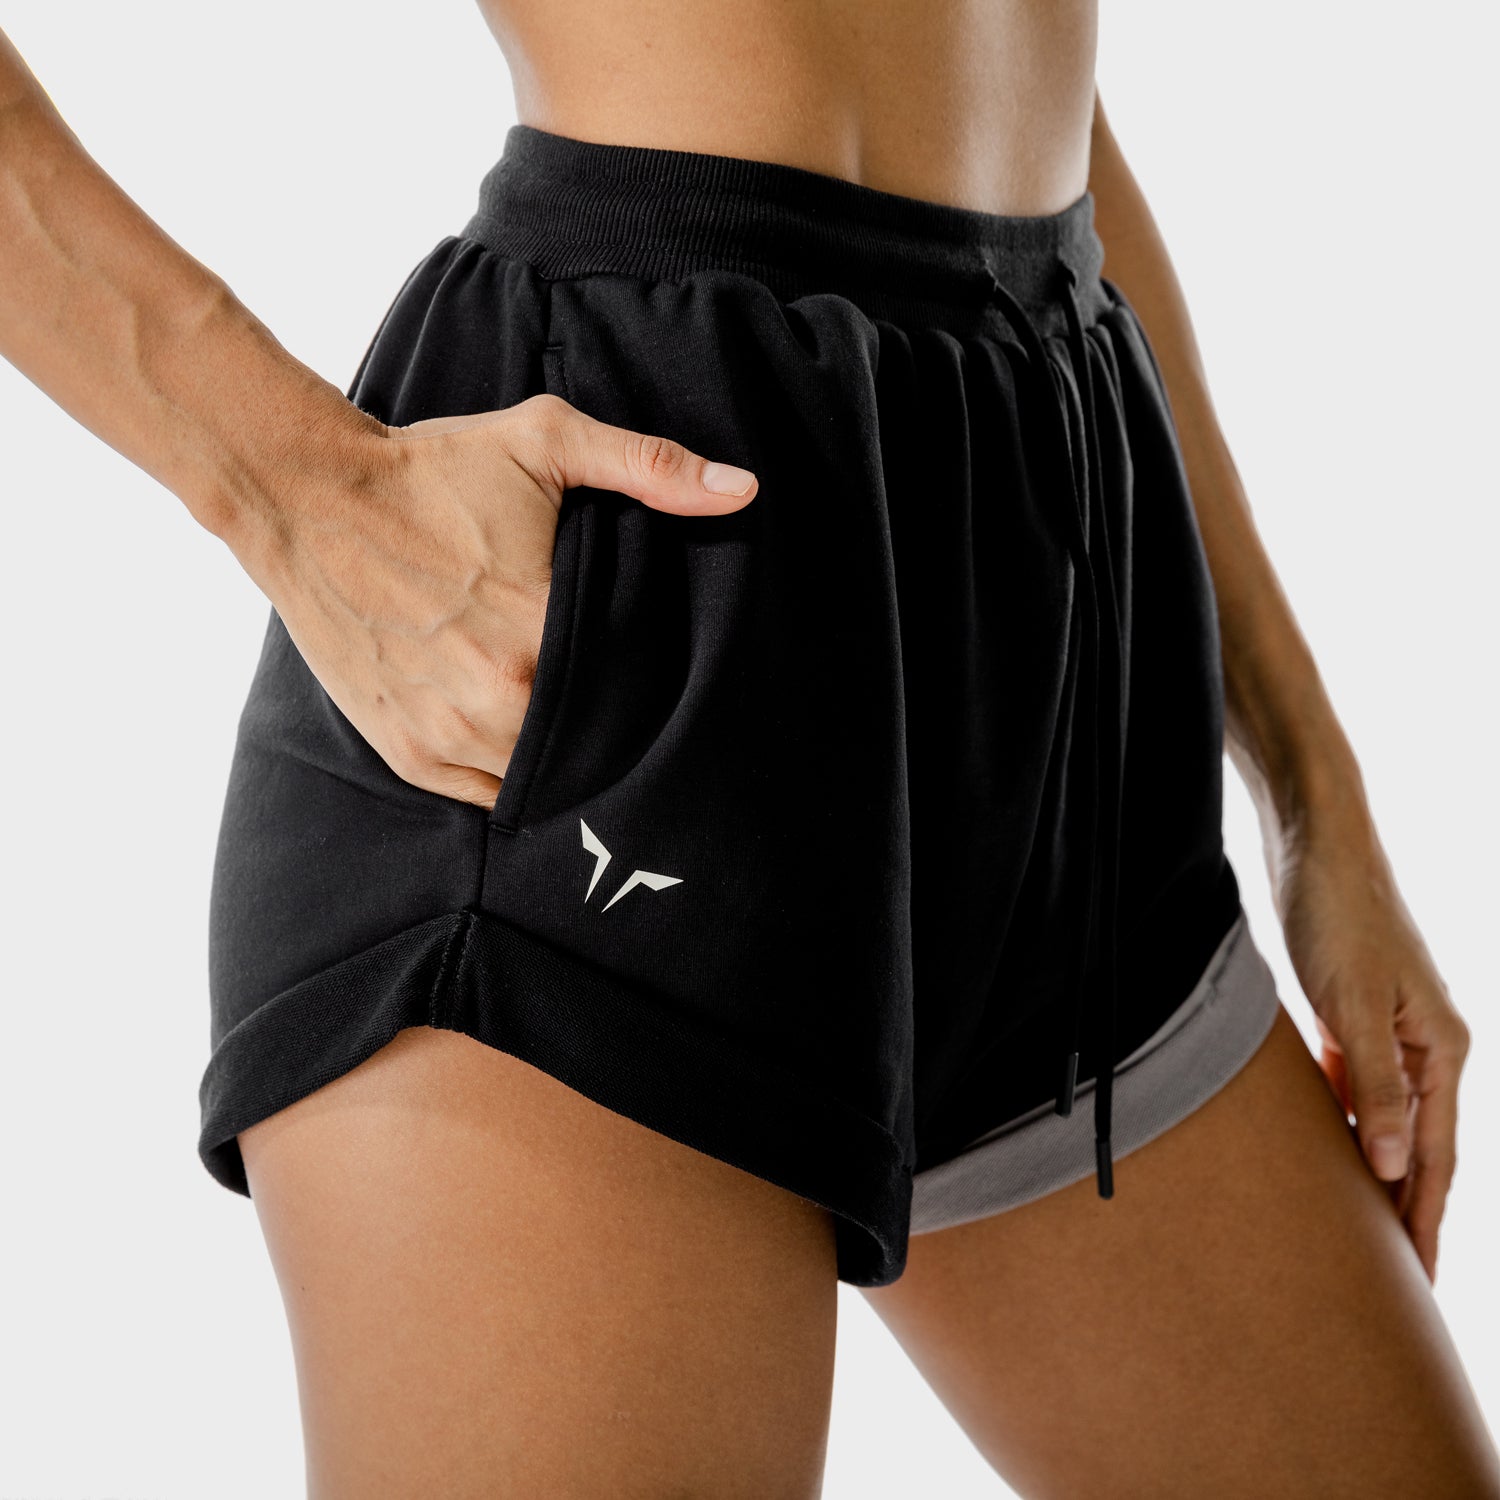 AE, LAB Shorts - Black, Workout Shorts Women